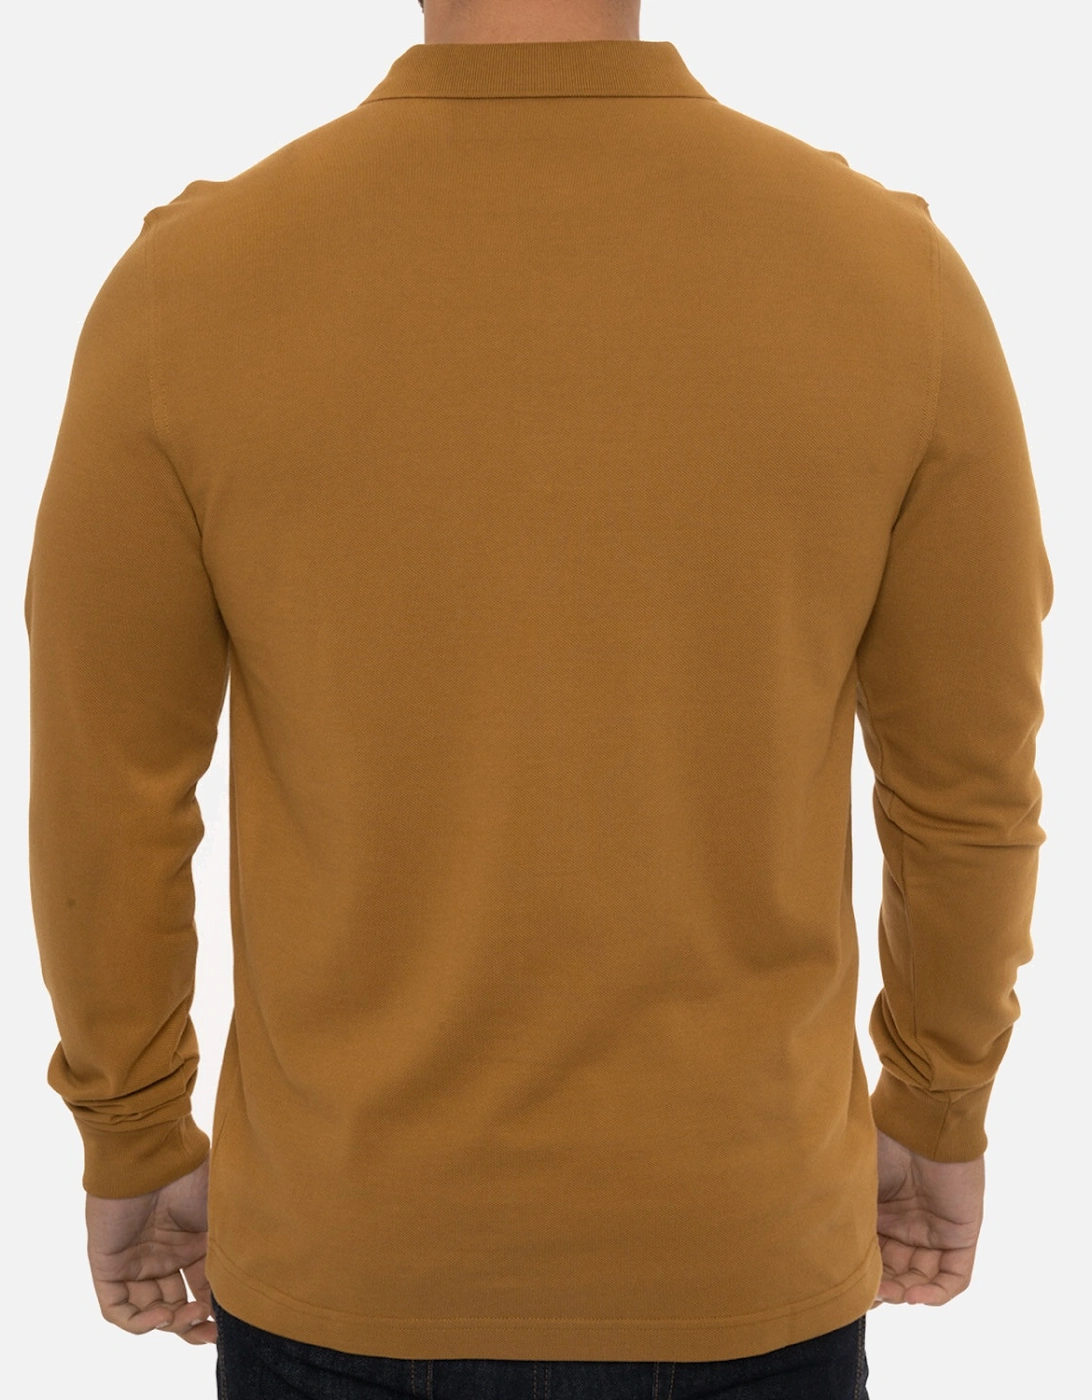 Mens Long Sleeve Plain Polo Shirt (Caramel)